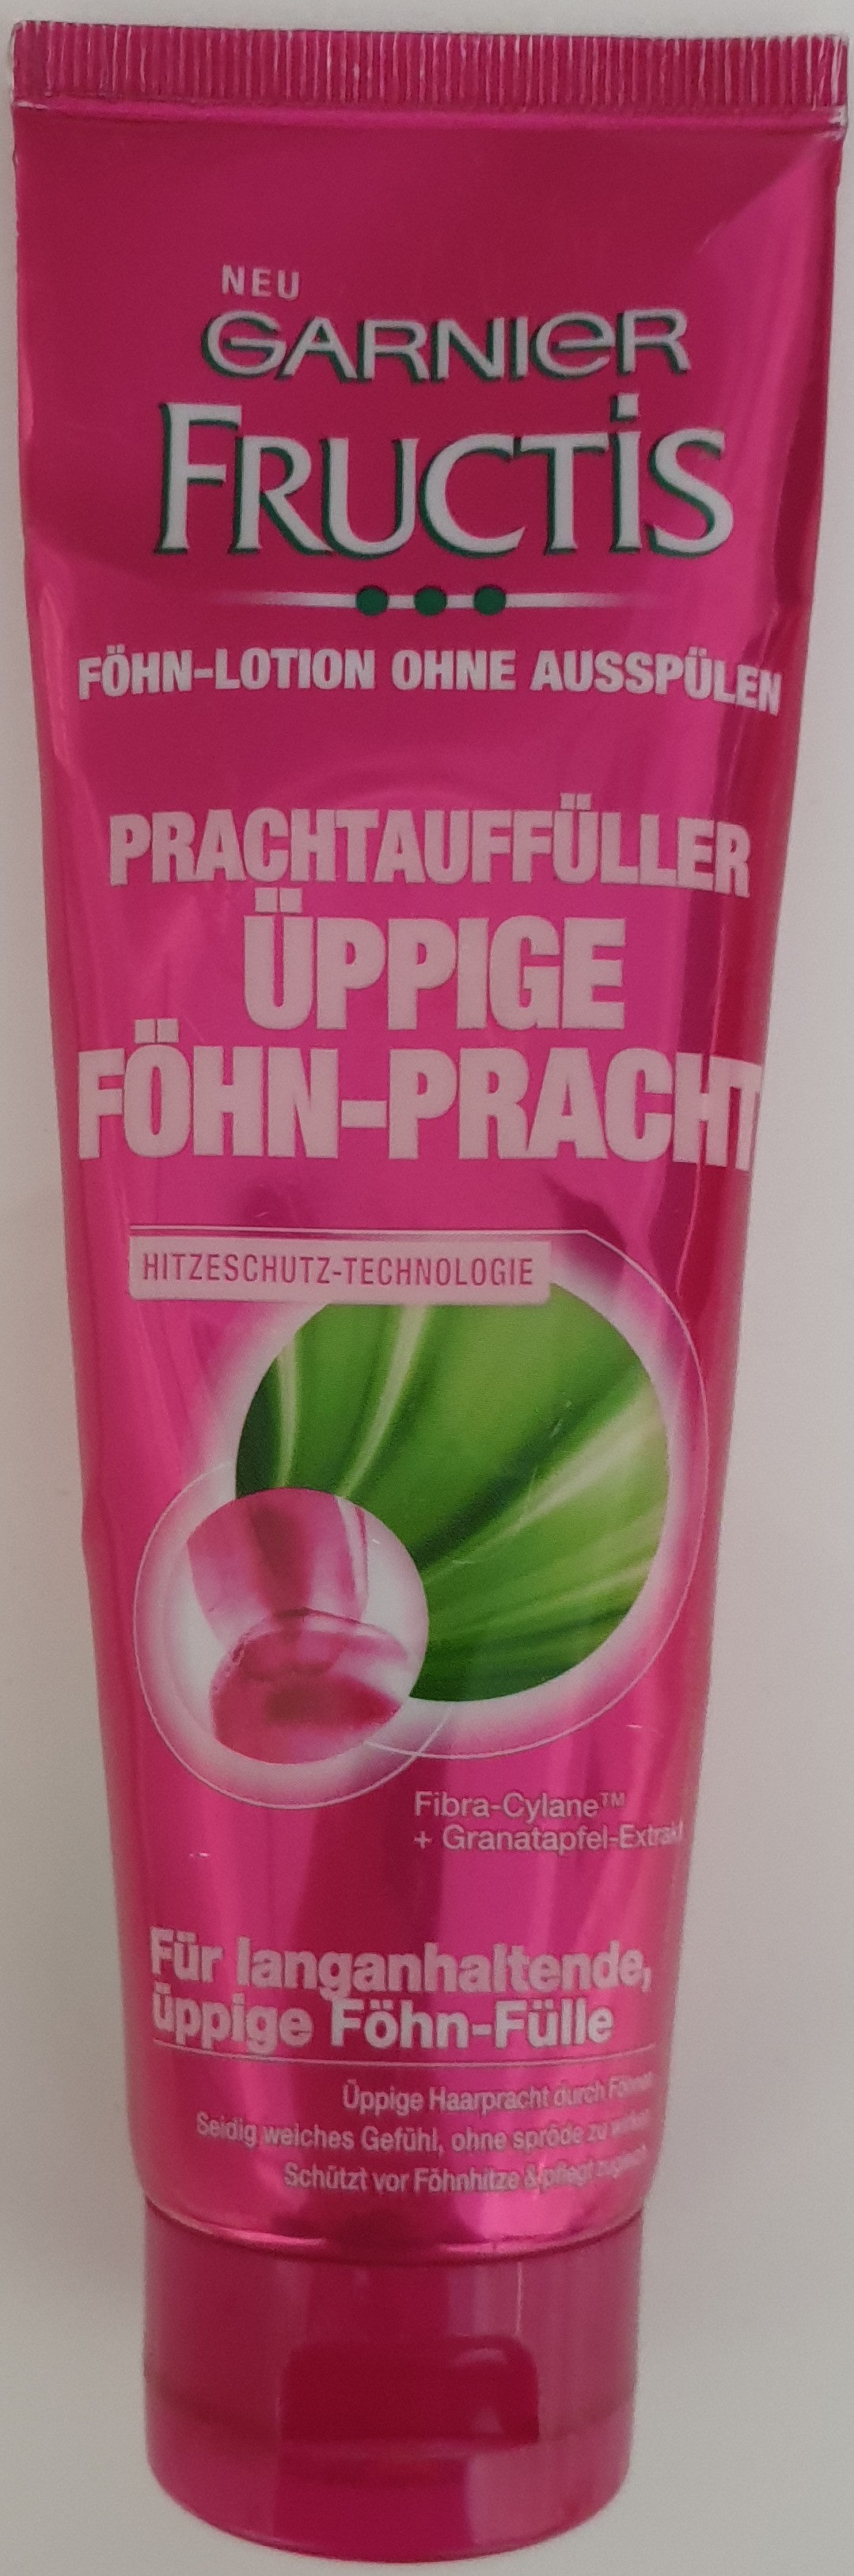 Fructis Prachtauffüller Föhn-Pracht - Product - de